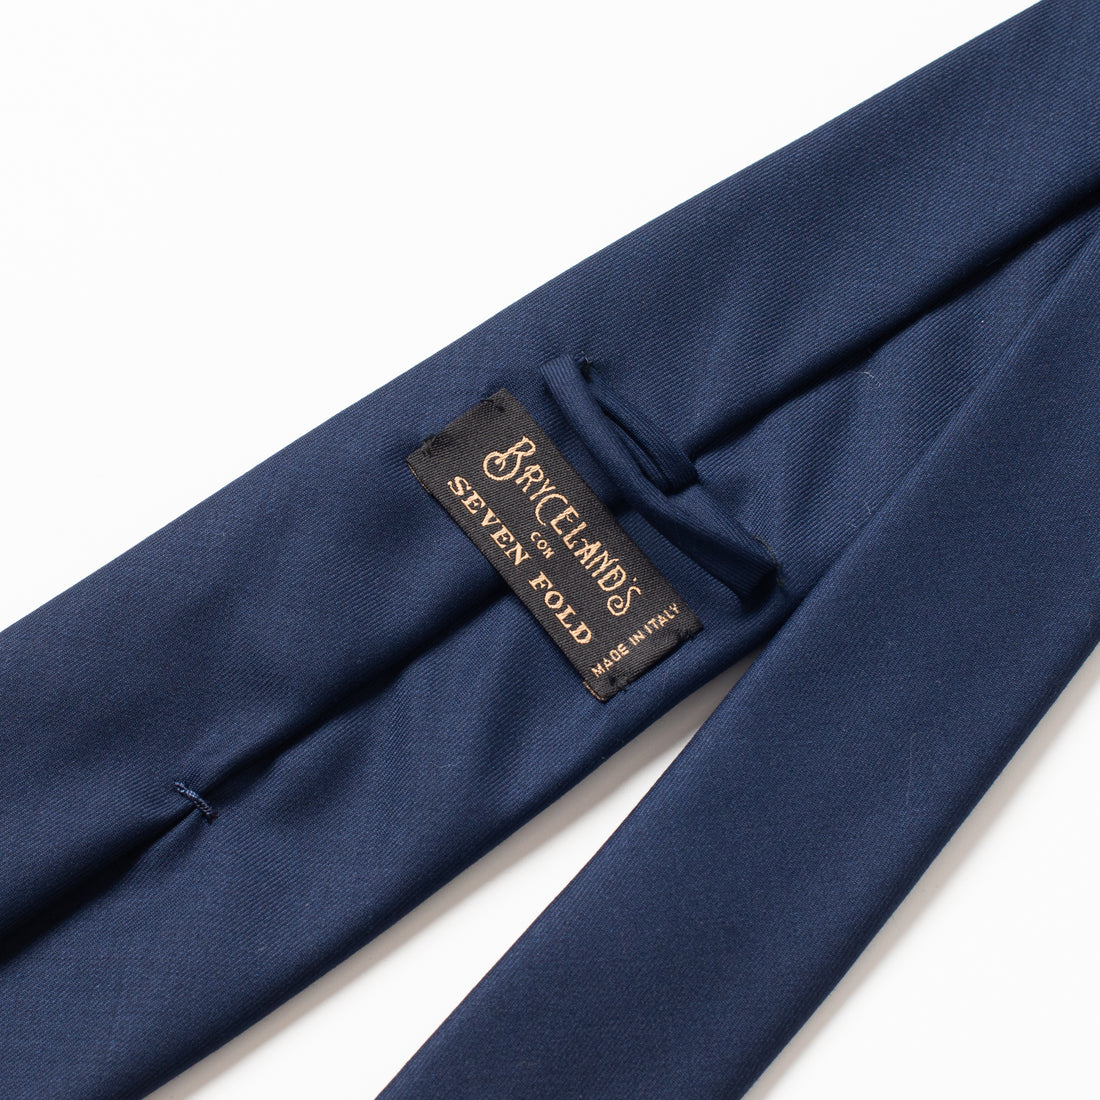 Bryceland’s Wool Tie Navy Solid